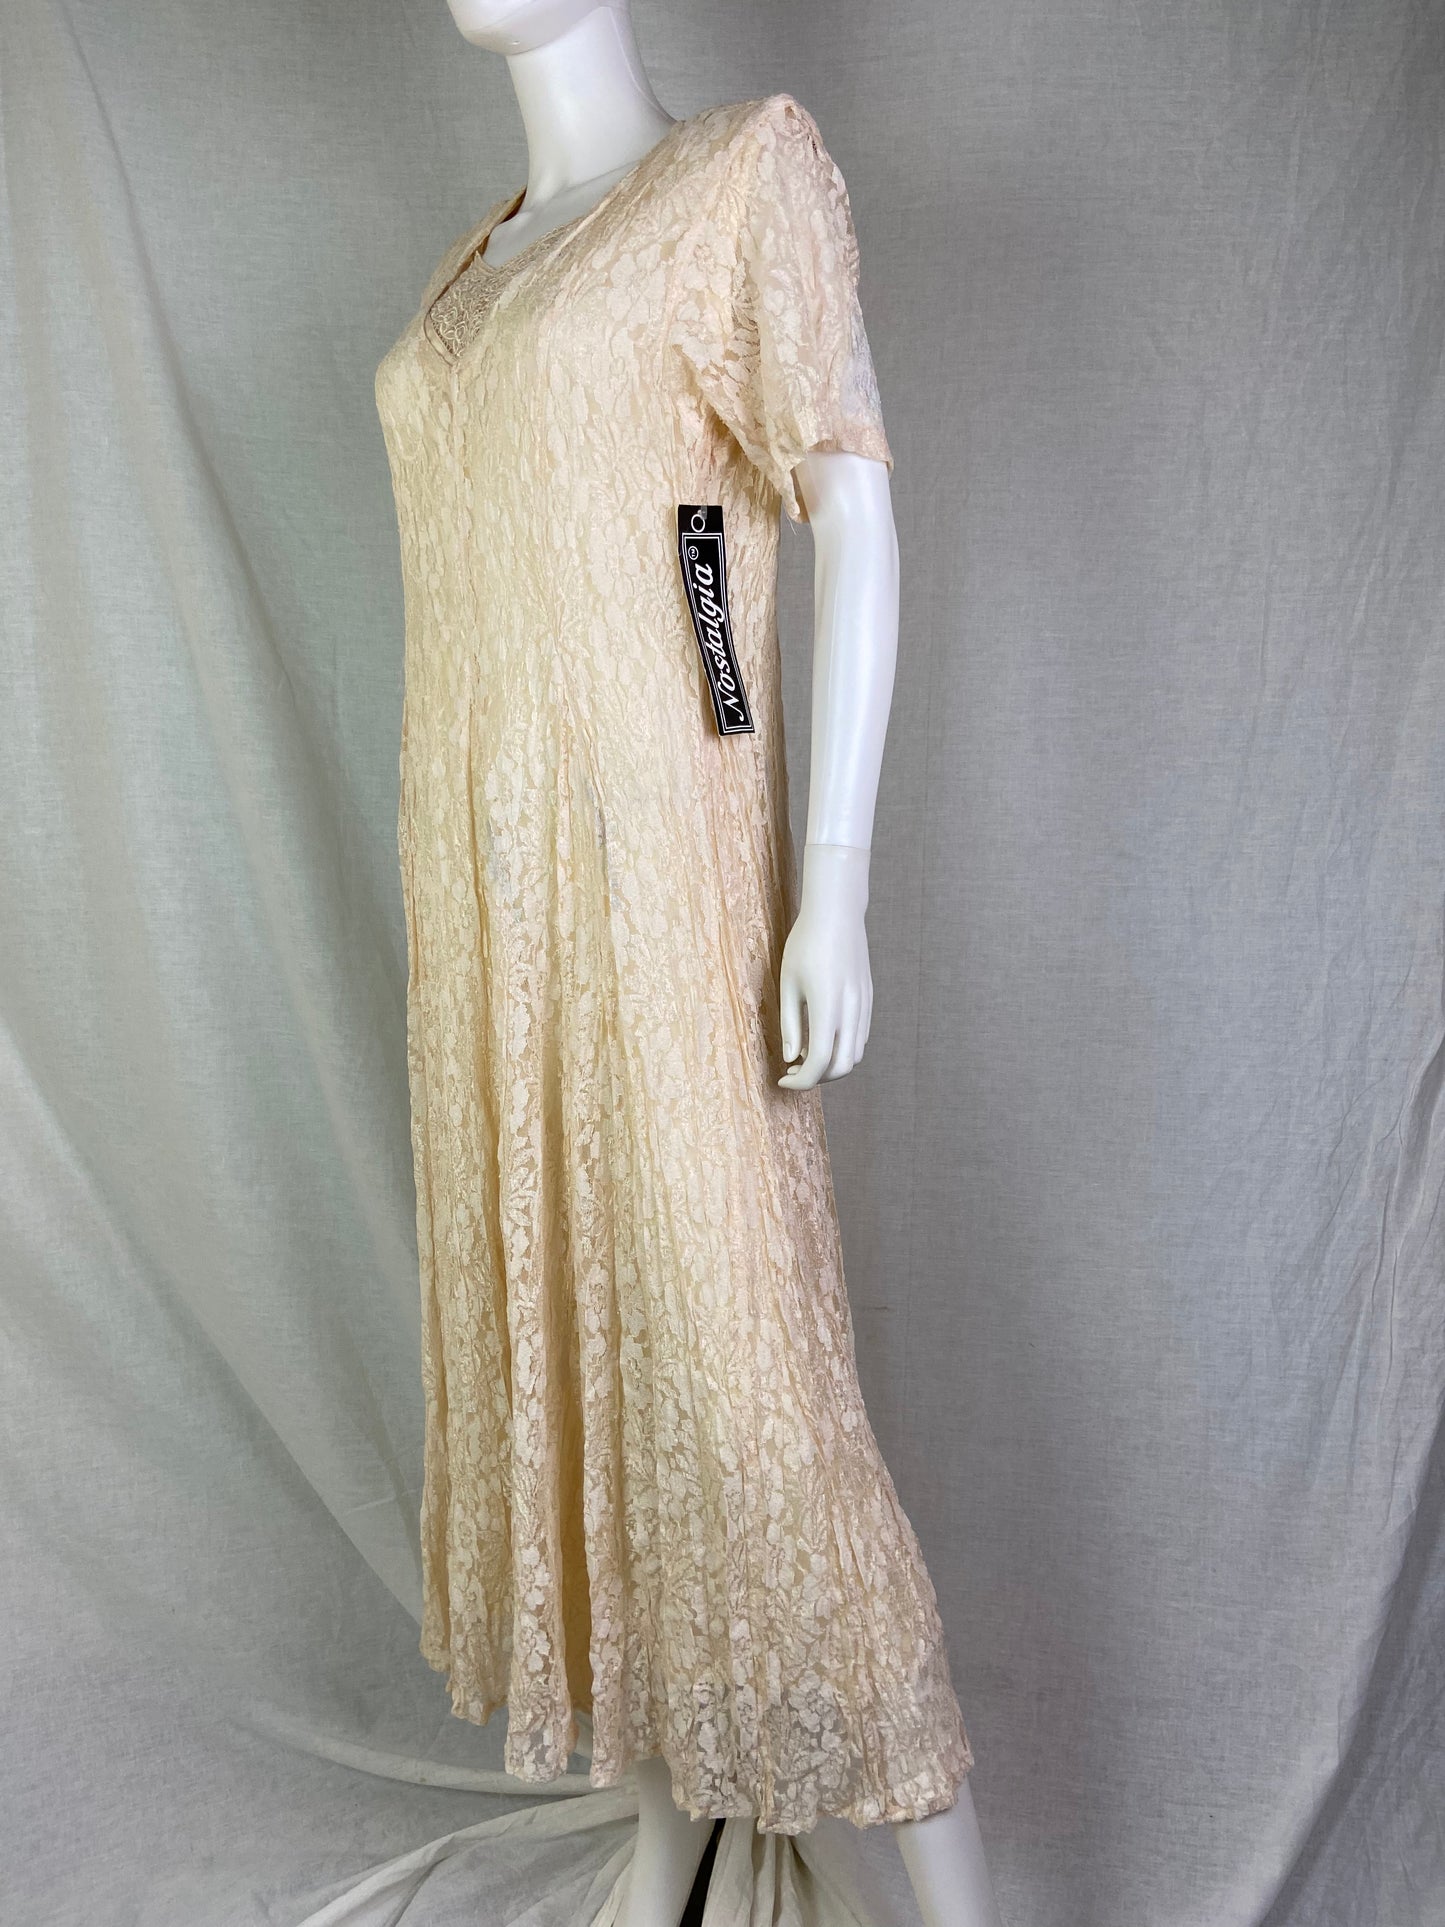 Nostalgia Cream Beige Lace Victorian Dress NWT